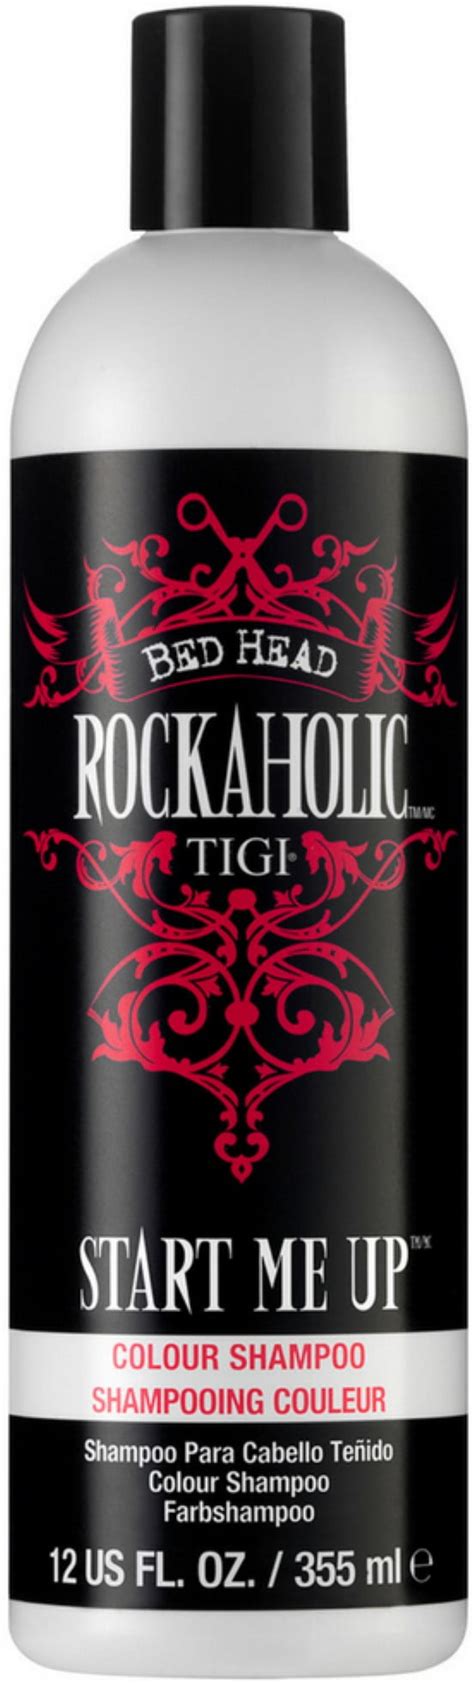 TIGI Rockaholic By Bed Head Start Me Up Colour Shampoo 12 Oz Walmart Com